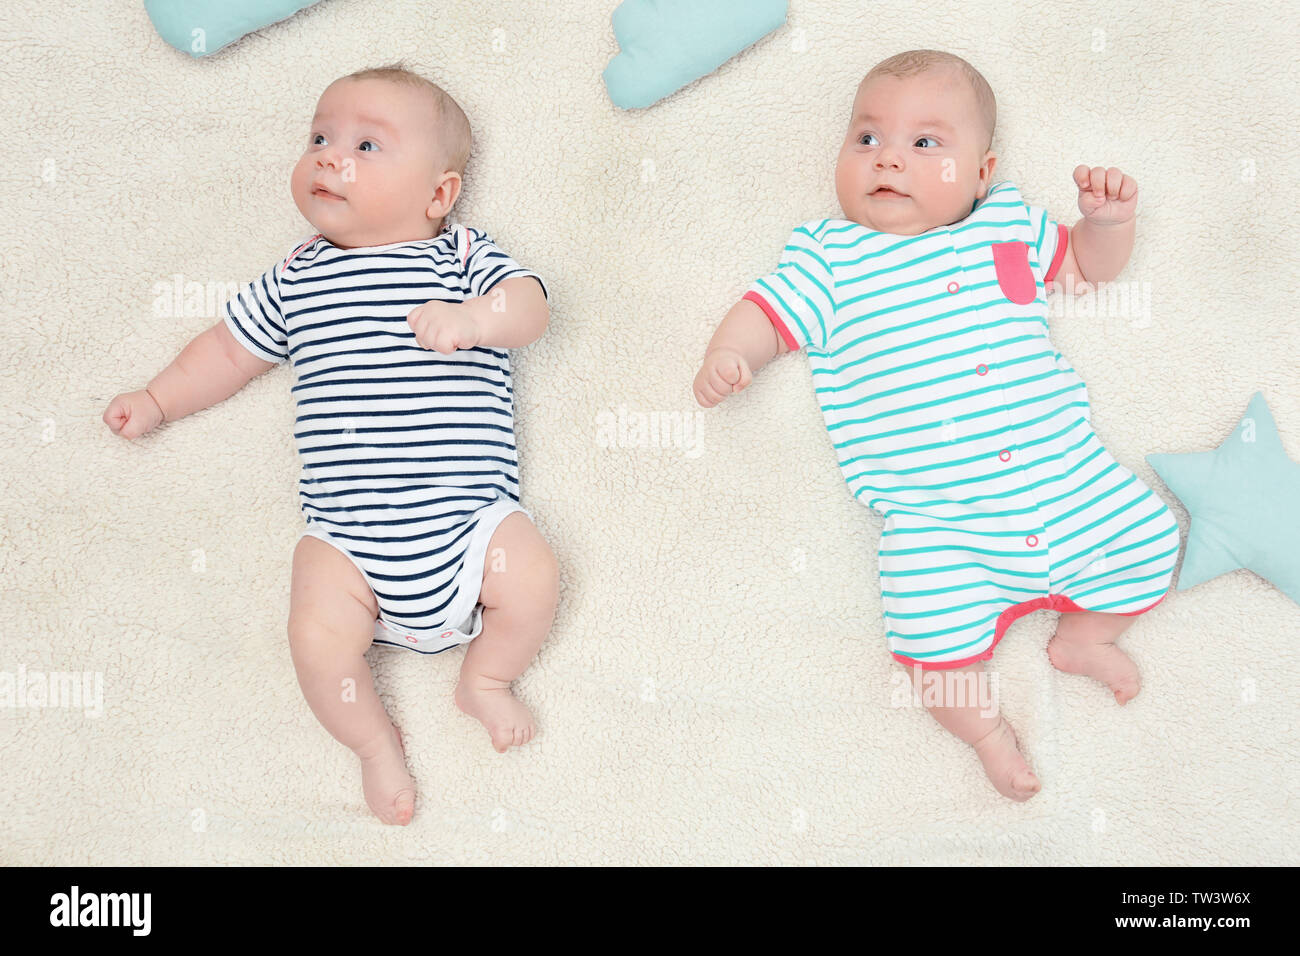 cute babies twins girls Stock Photo - Alamy